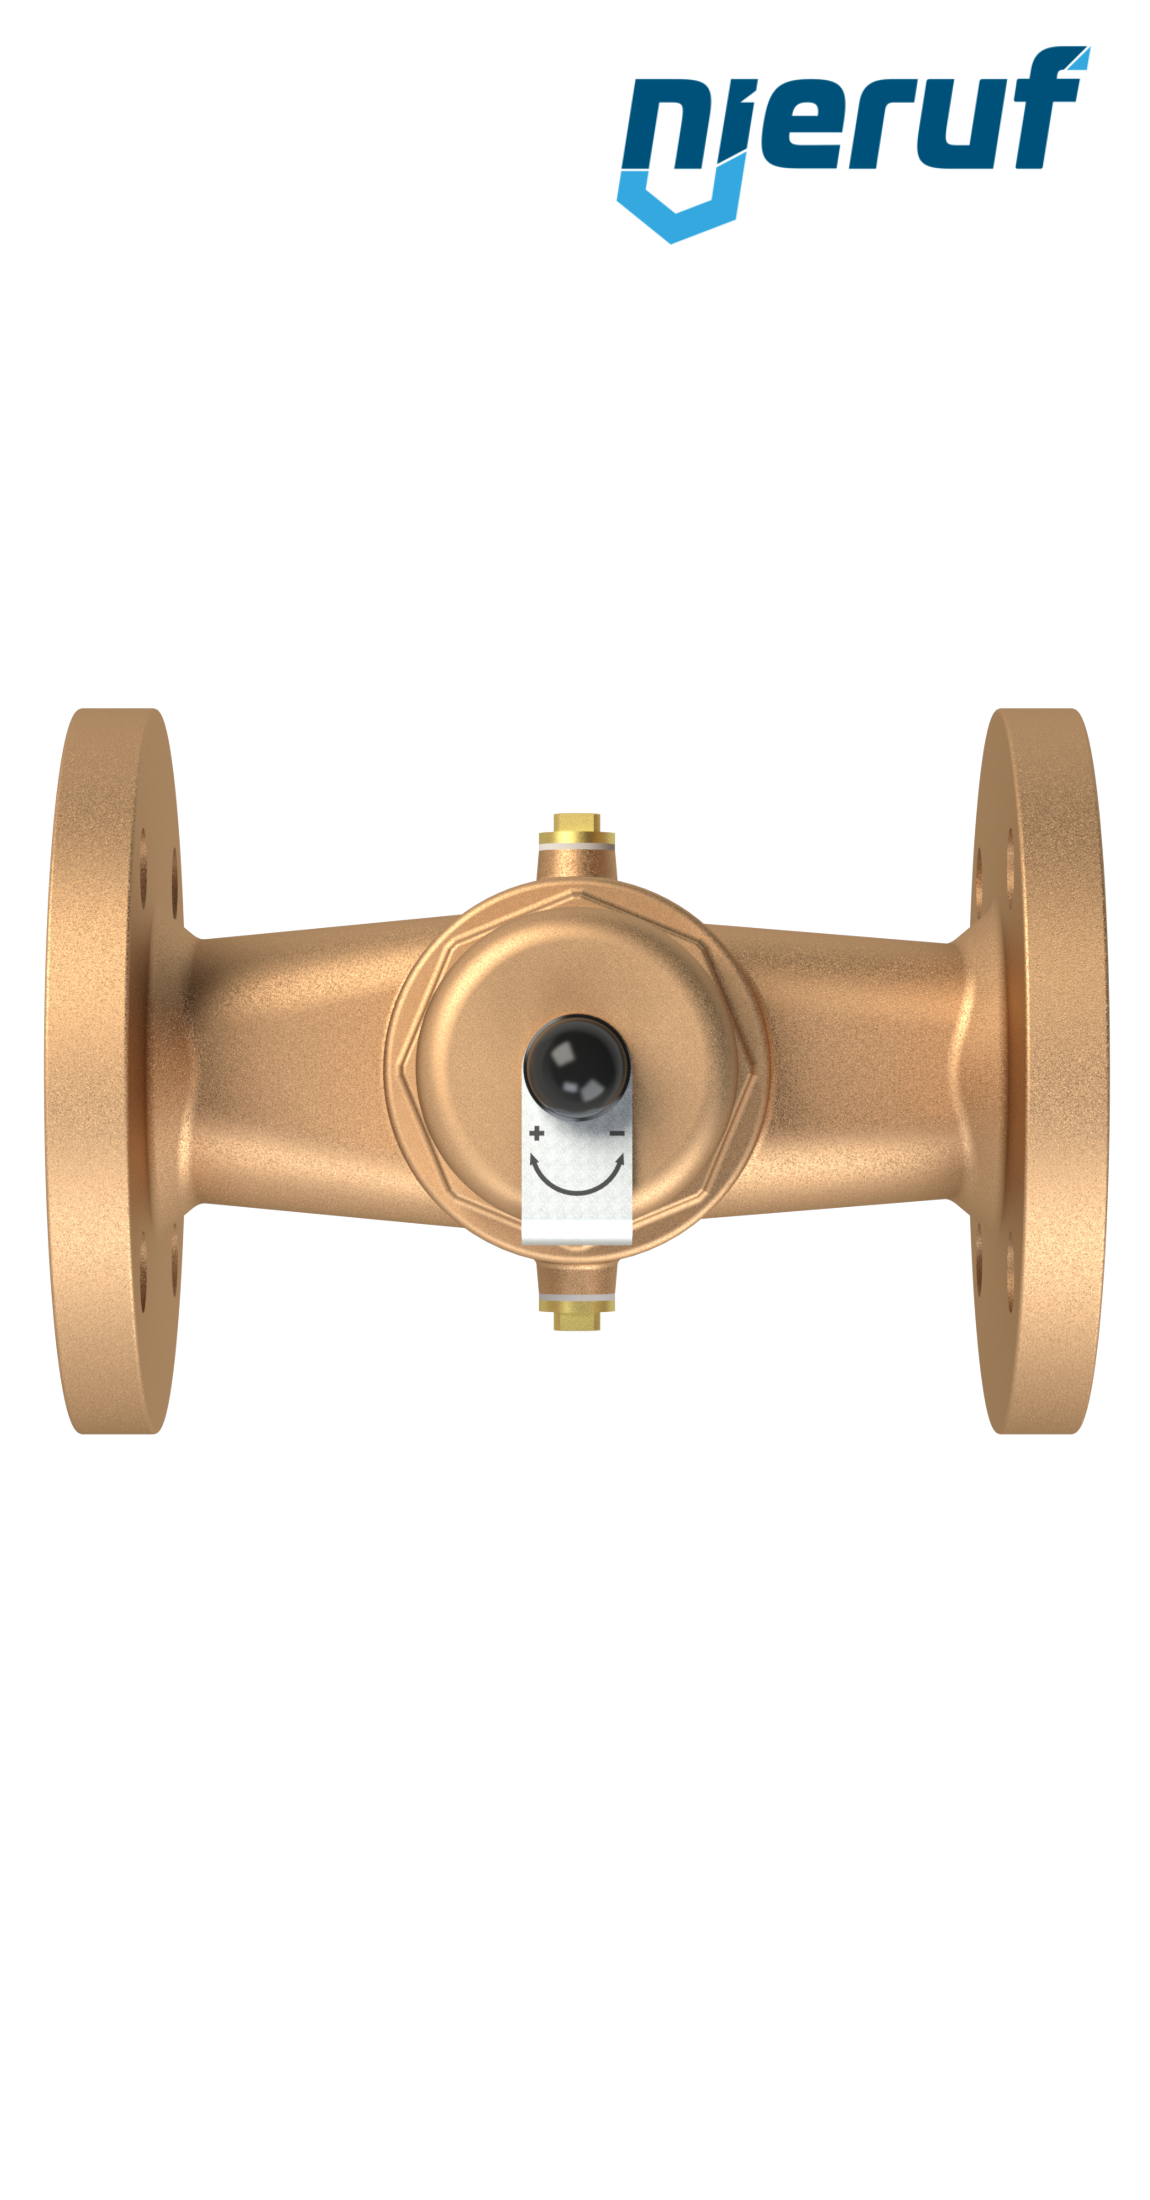 Flange-pressure reducing valve DN 32 PN16 DM05 gunmetal/brass EPDM 1.0 - 8.0 bar